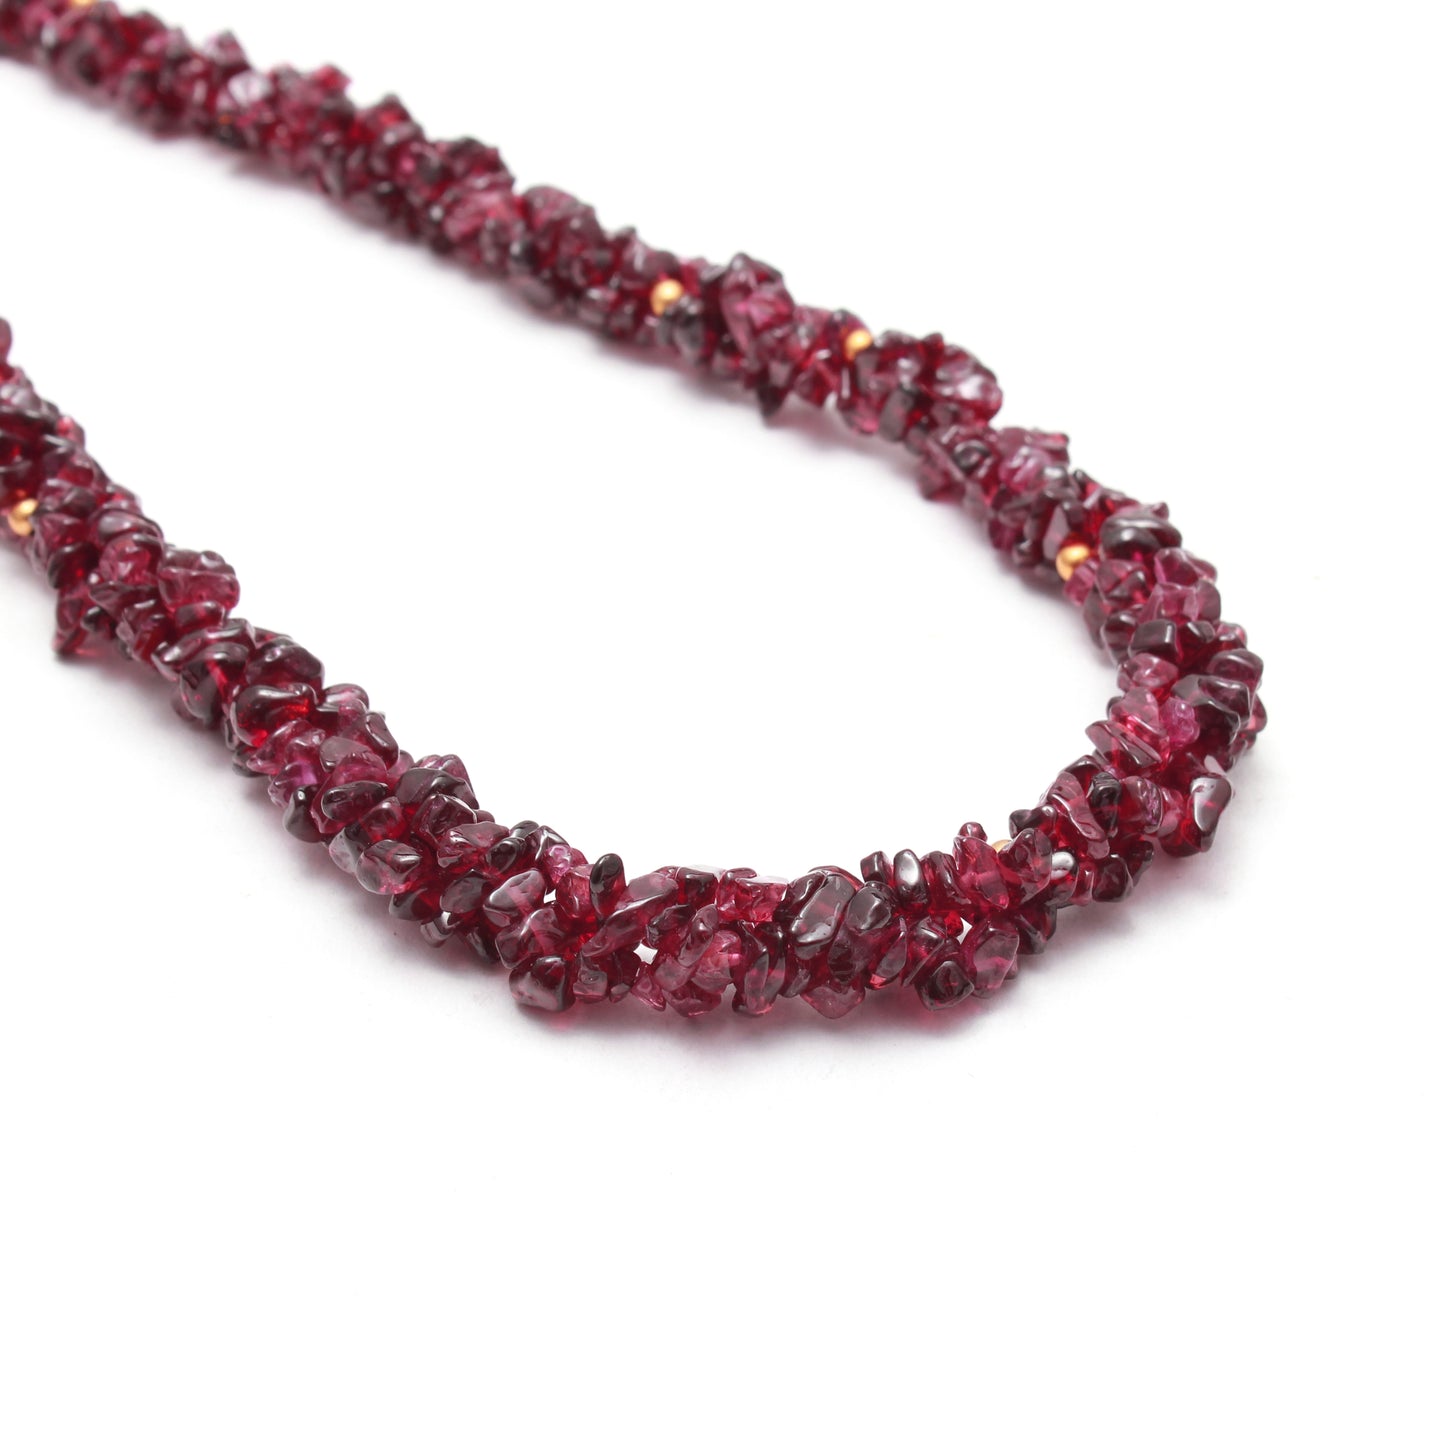 Birthstone Garnet Chips Beaded Necklace, Handmade Beads Jewelry